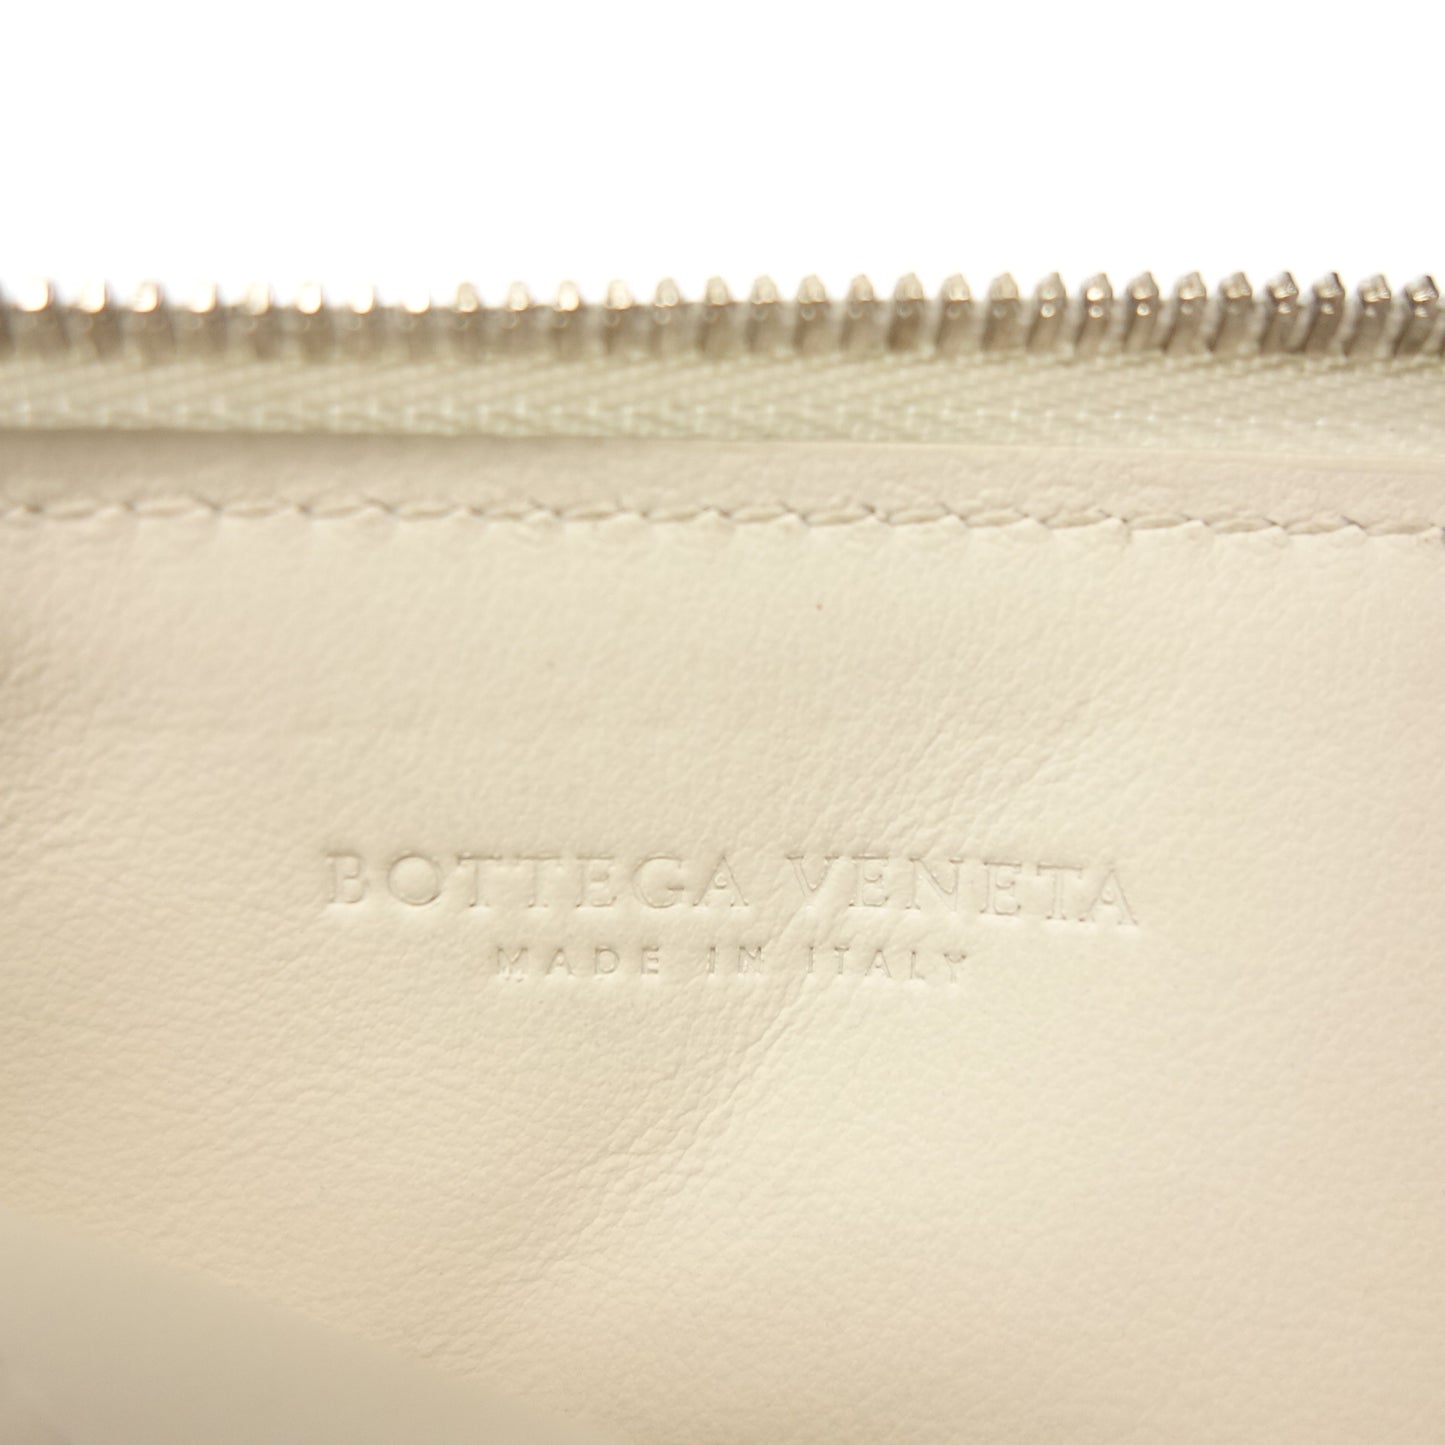 Bottega Veneta Coin Purse Coin Case Maxi Intrecciato Leather White Box BOTTEGA VENETA [AFI18] [Used] 